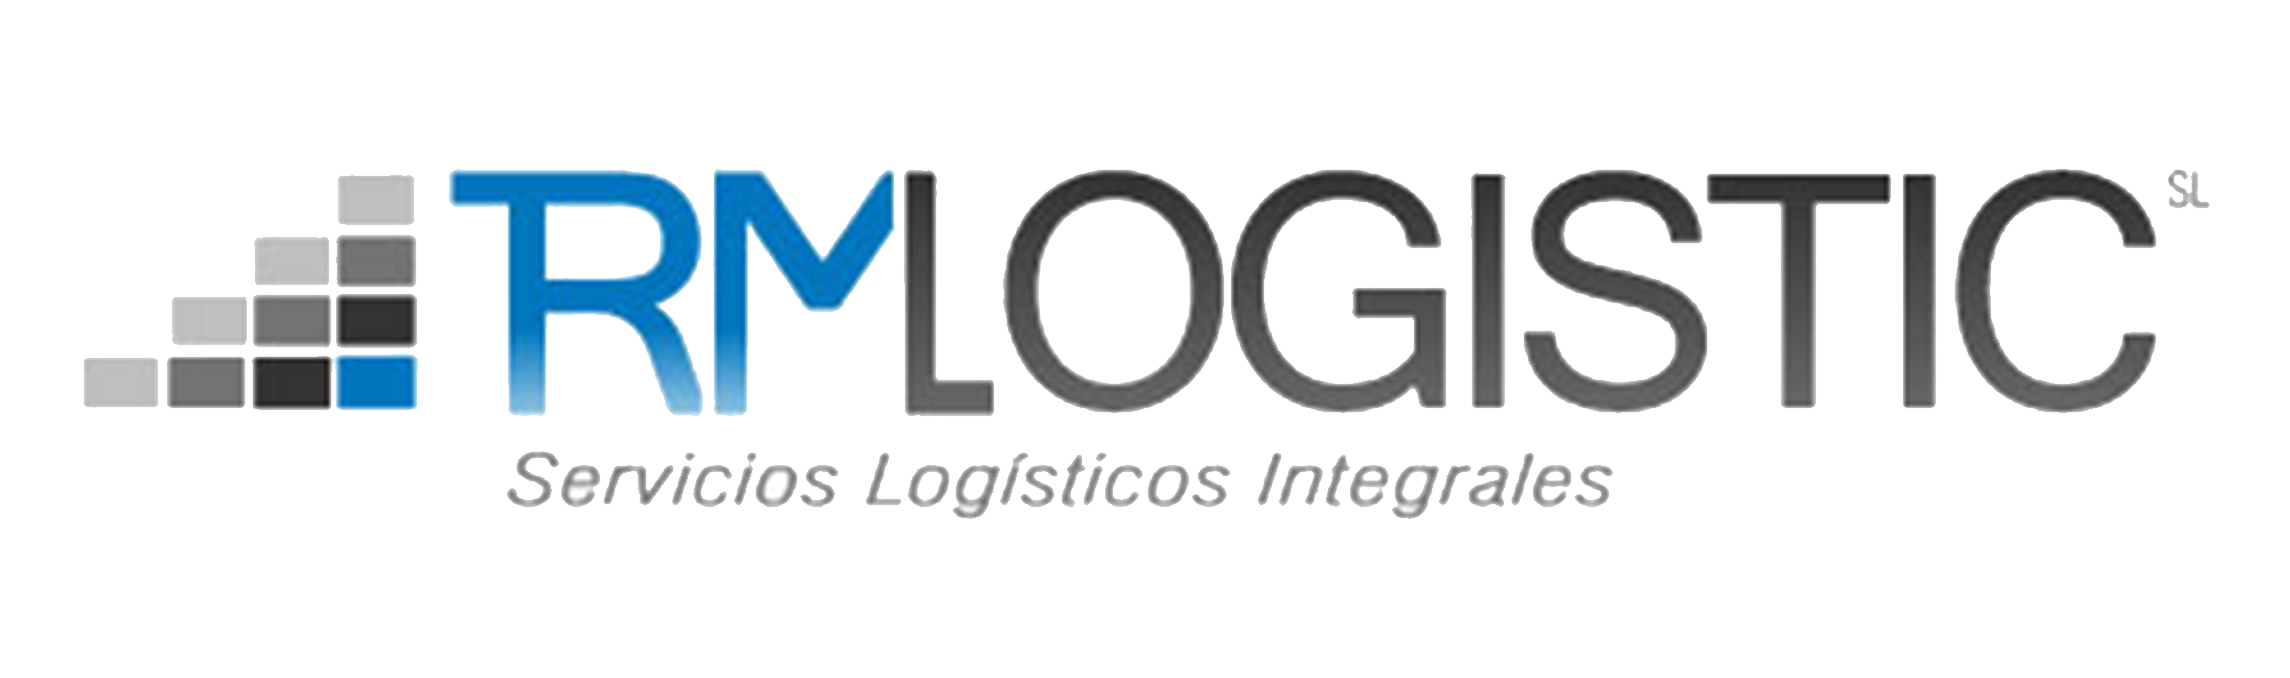 RM Logistic - Servicios logísticos integrales | Servicios de transporte nacional e internacional